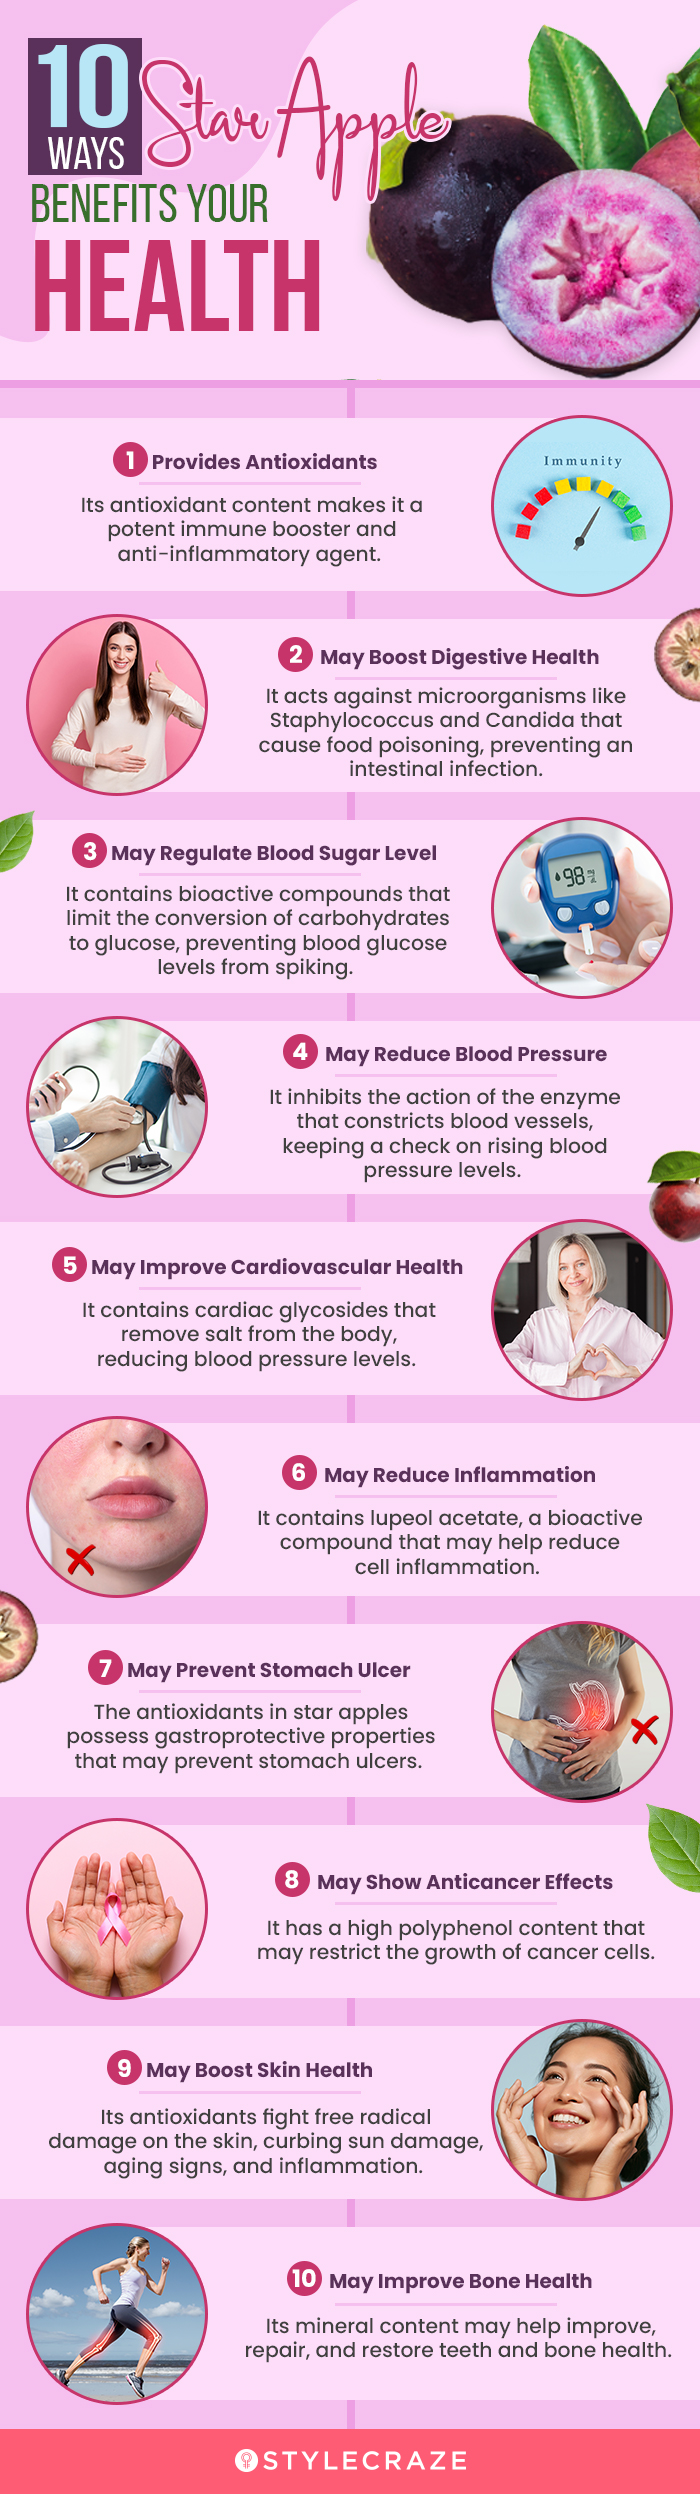 10 ways star apple benefits your health (infographic)